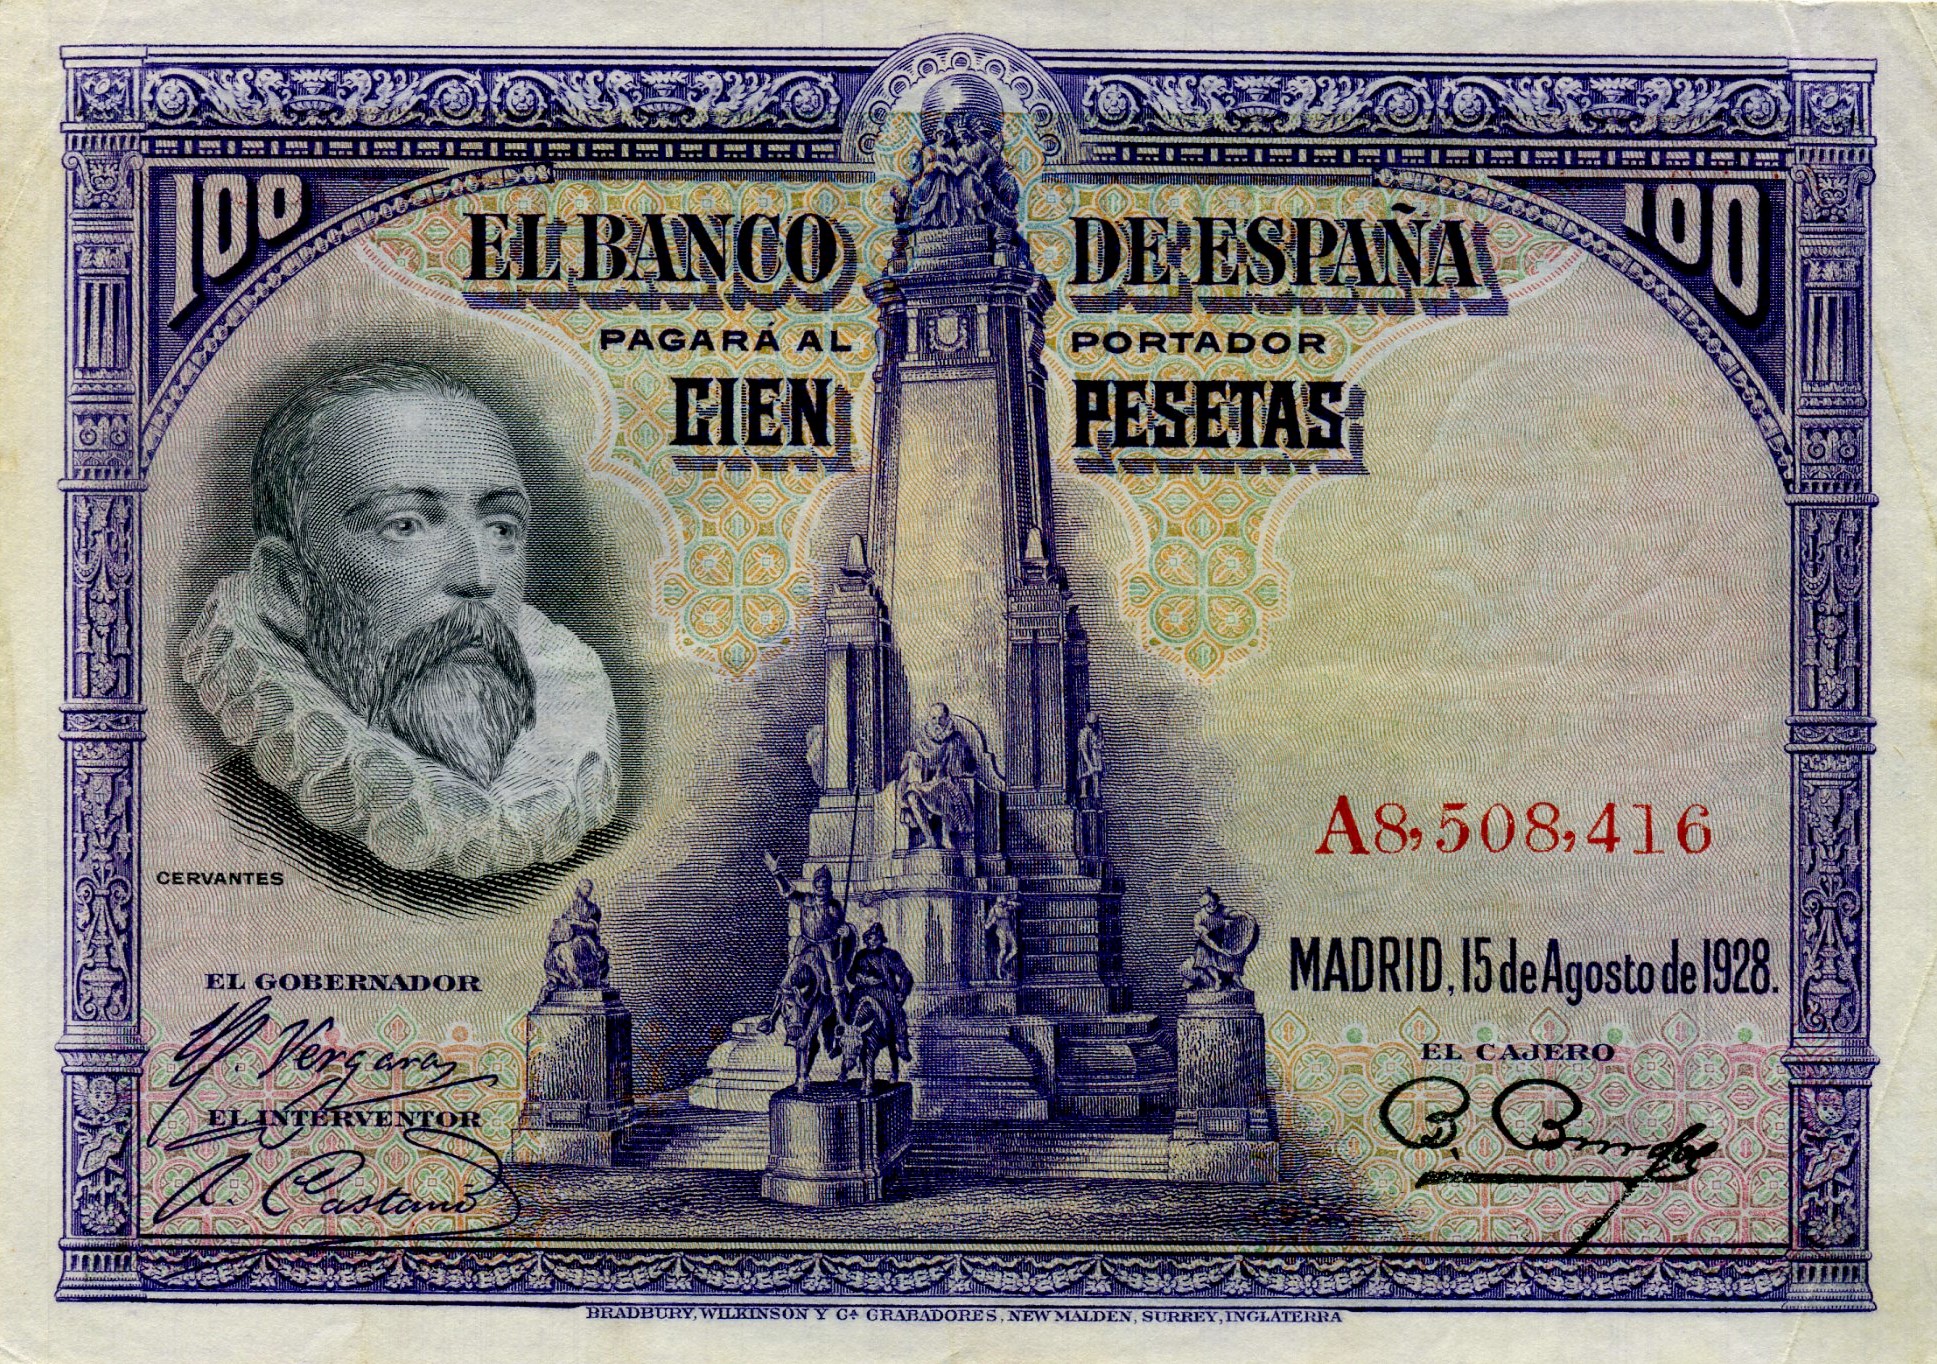 100 песо 1928 года. Сервантес. Испания. Аверс. Реферат Рефератович.